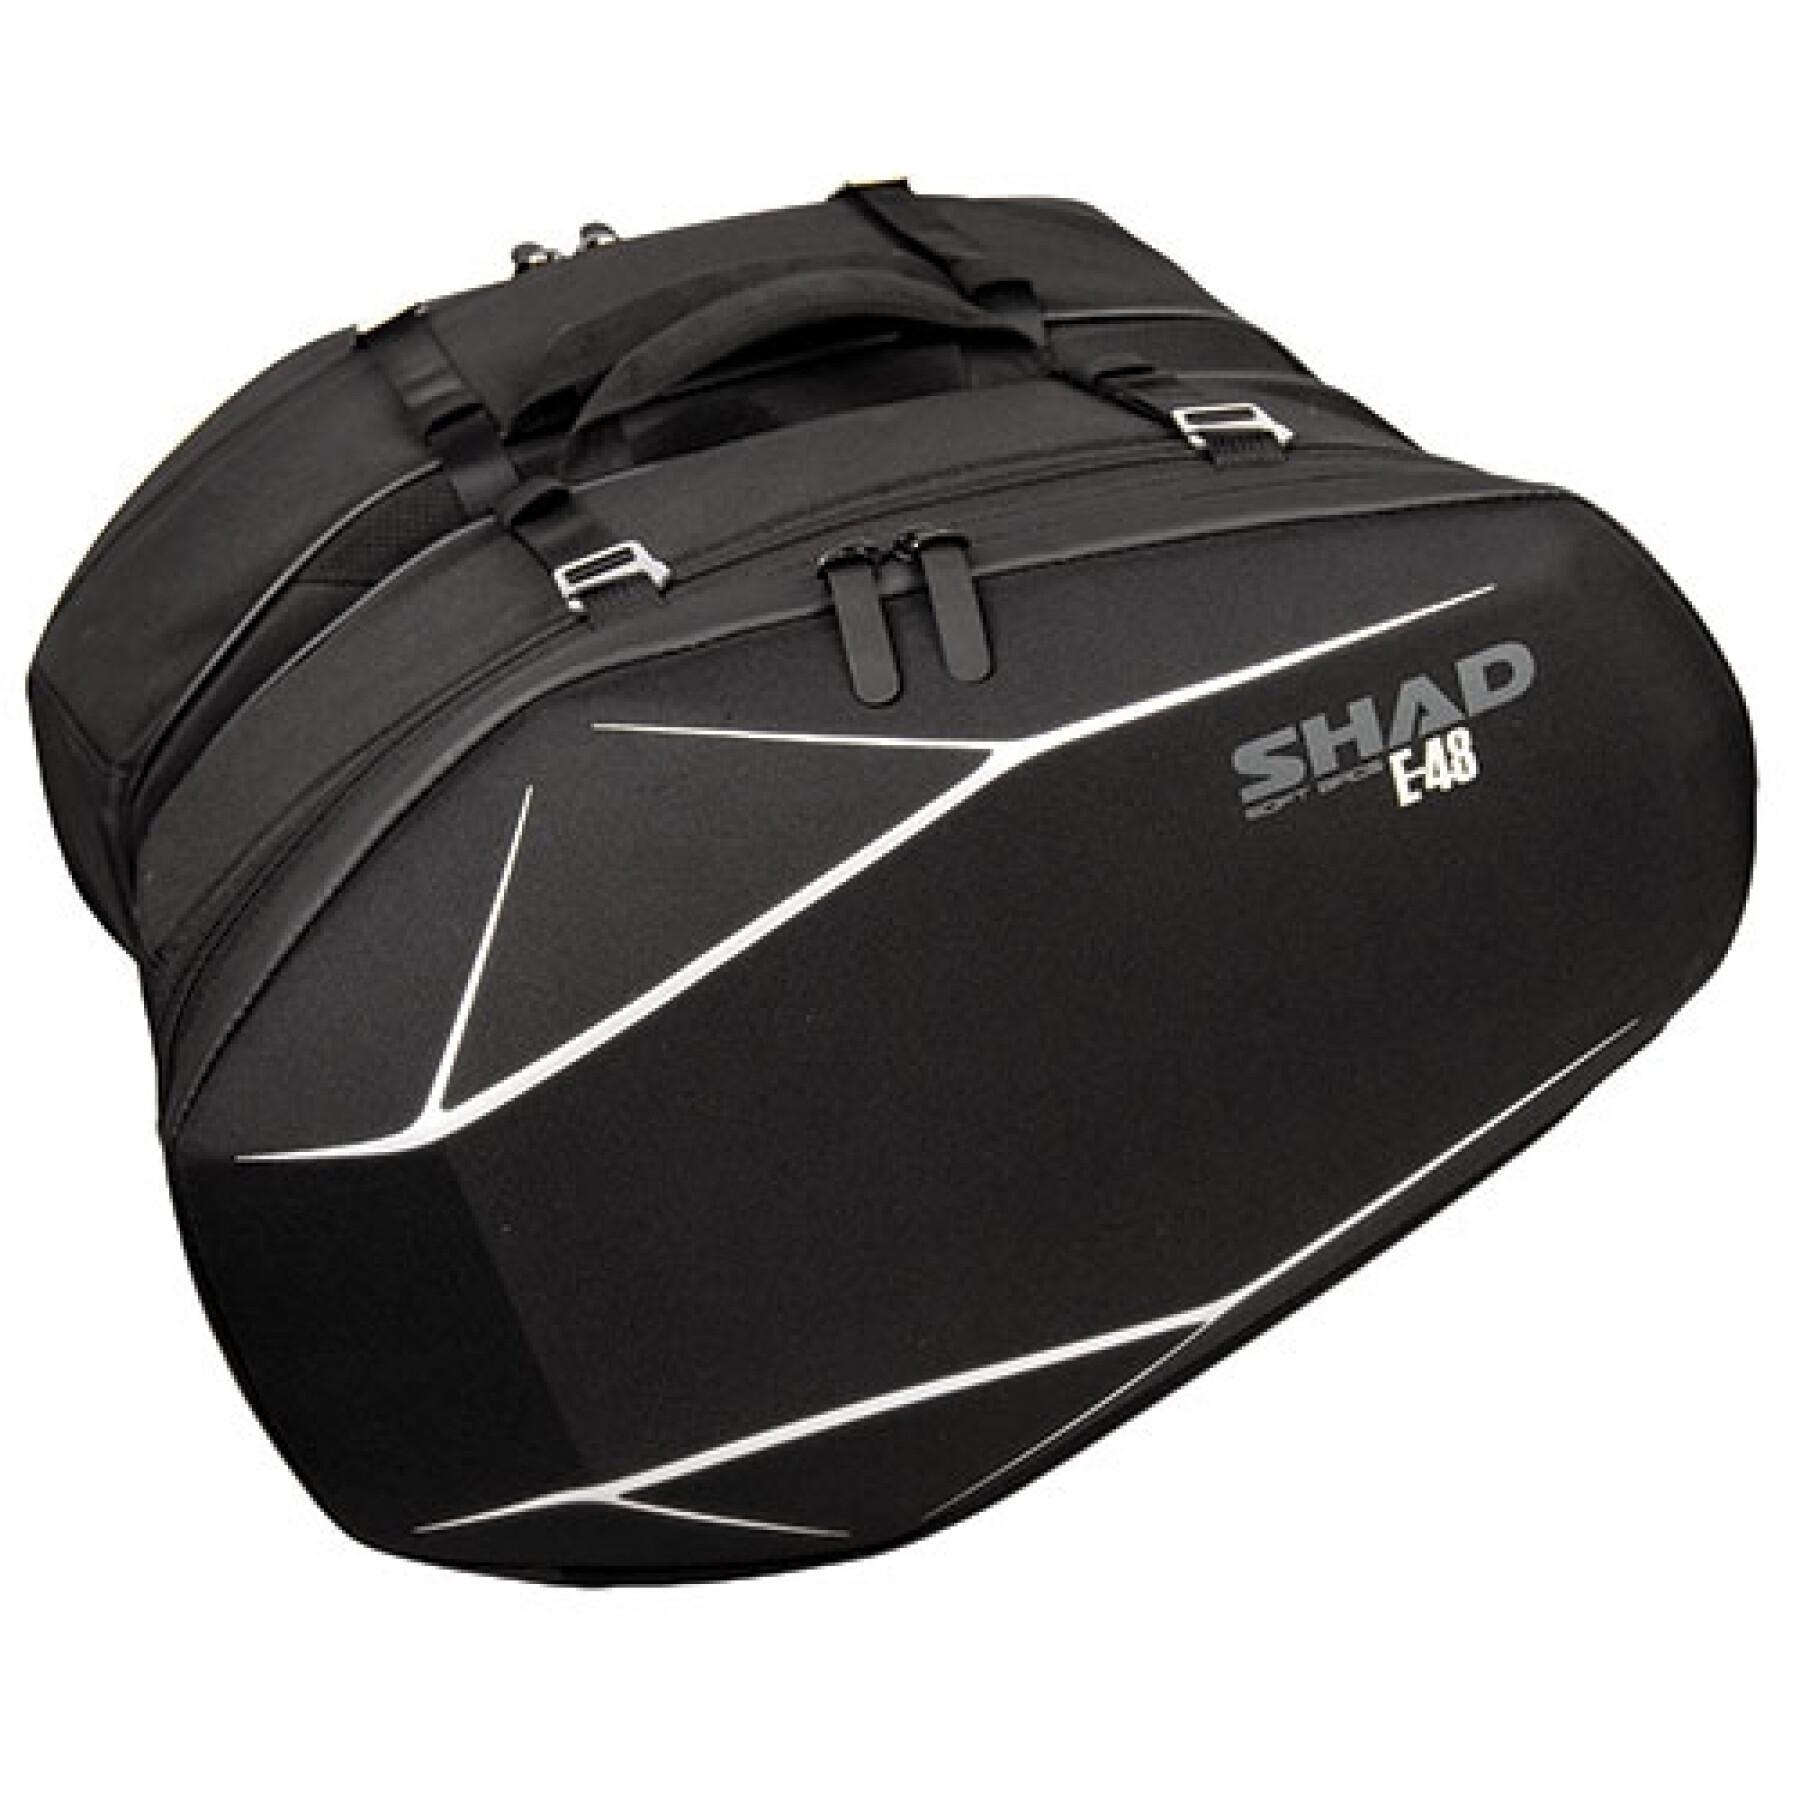 Rider bags Shad E48